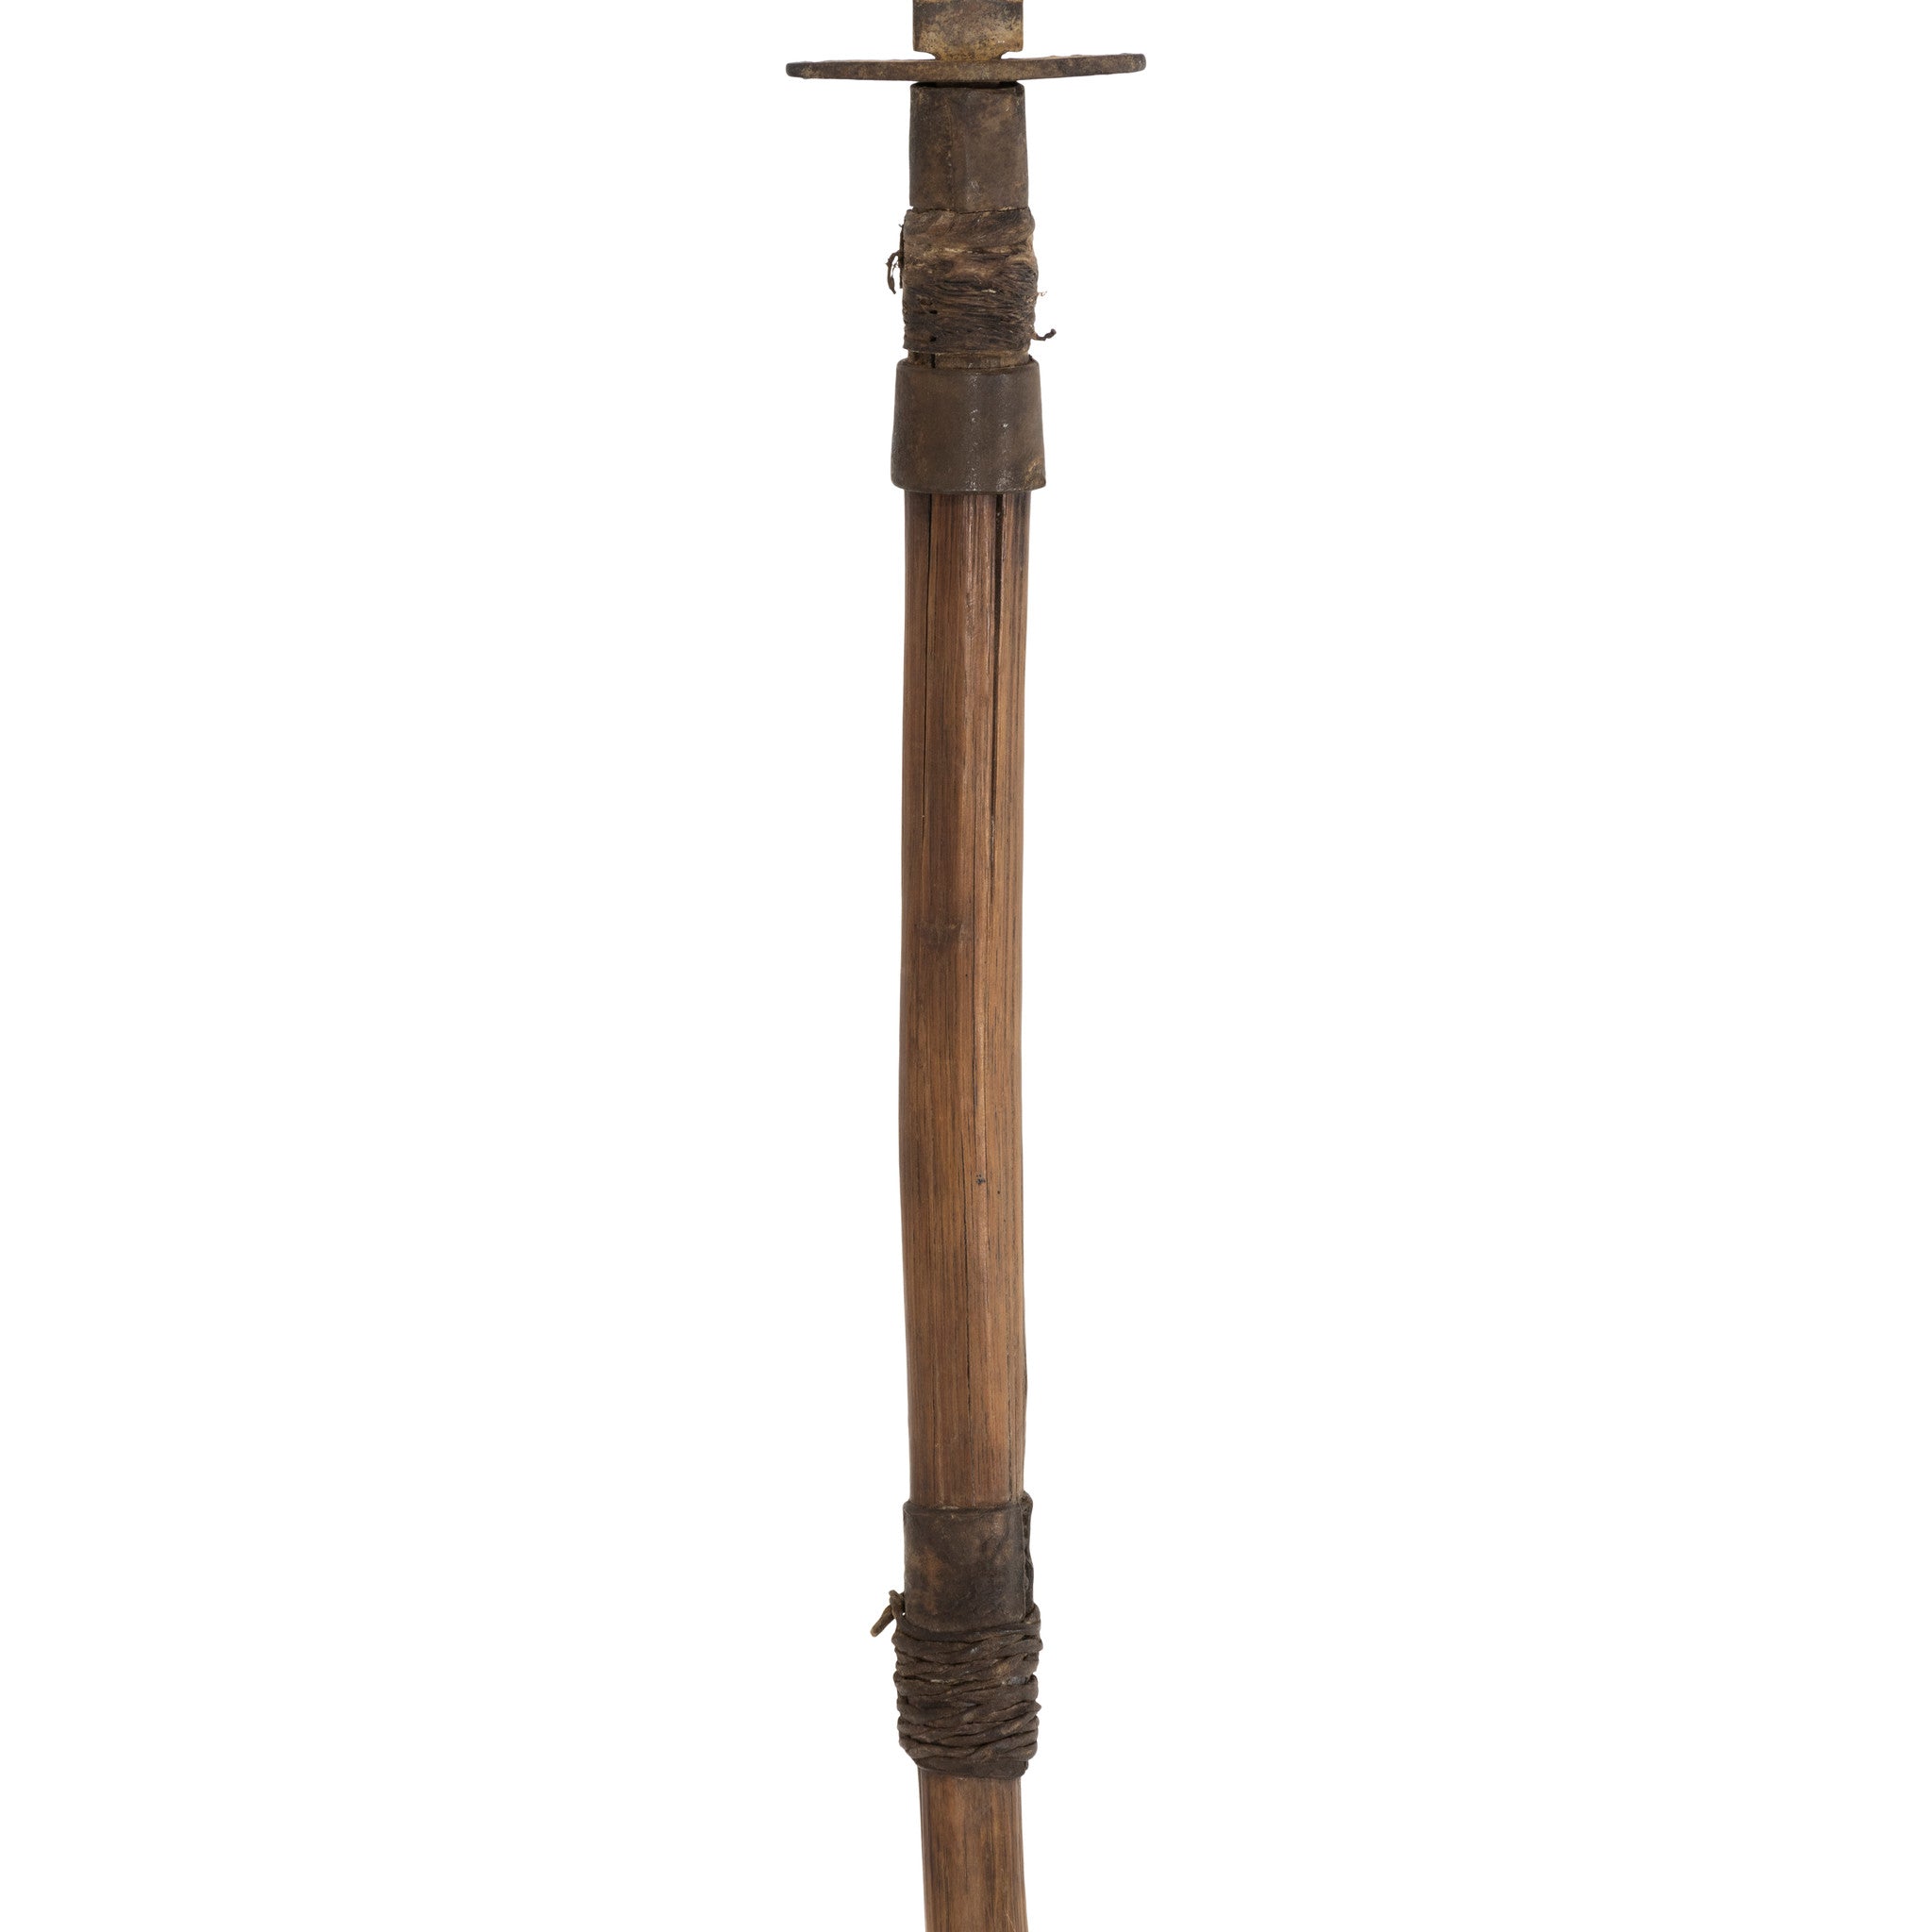 Southern Plains Sword Lance Spear